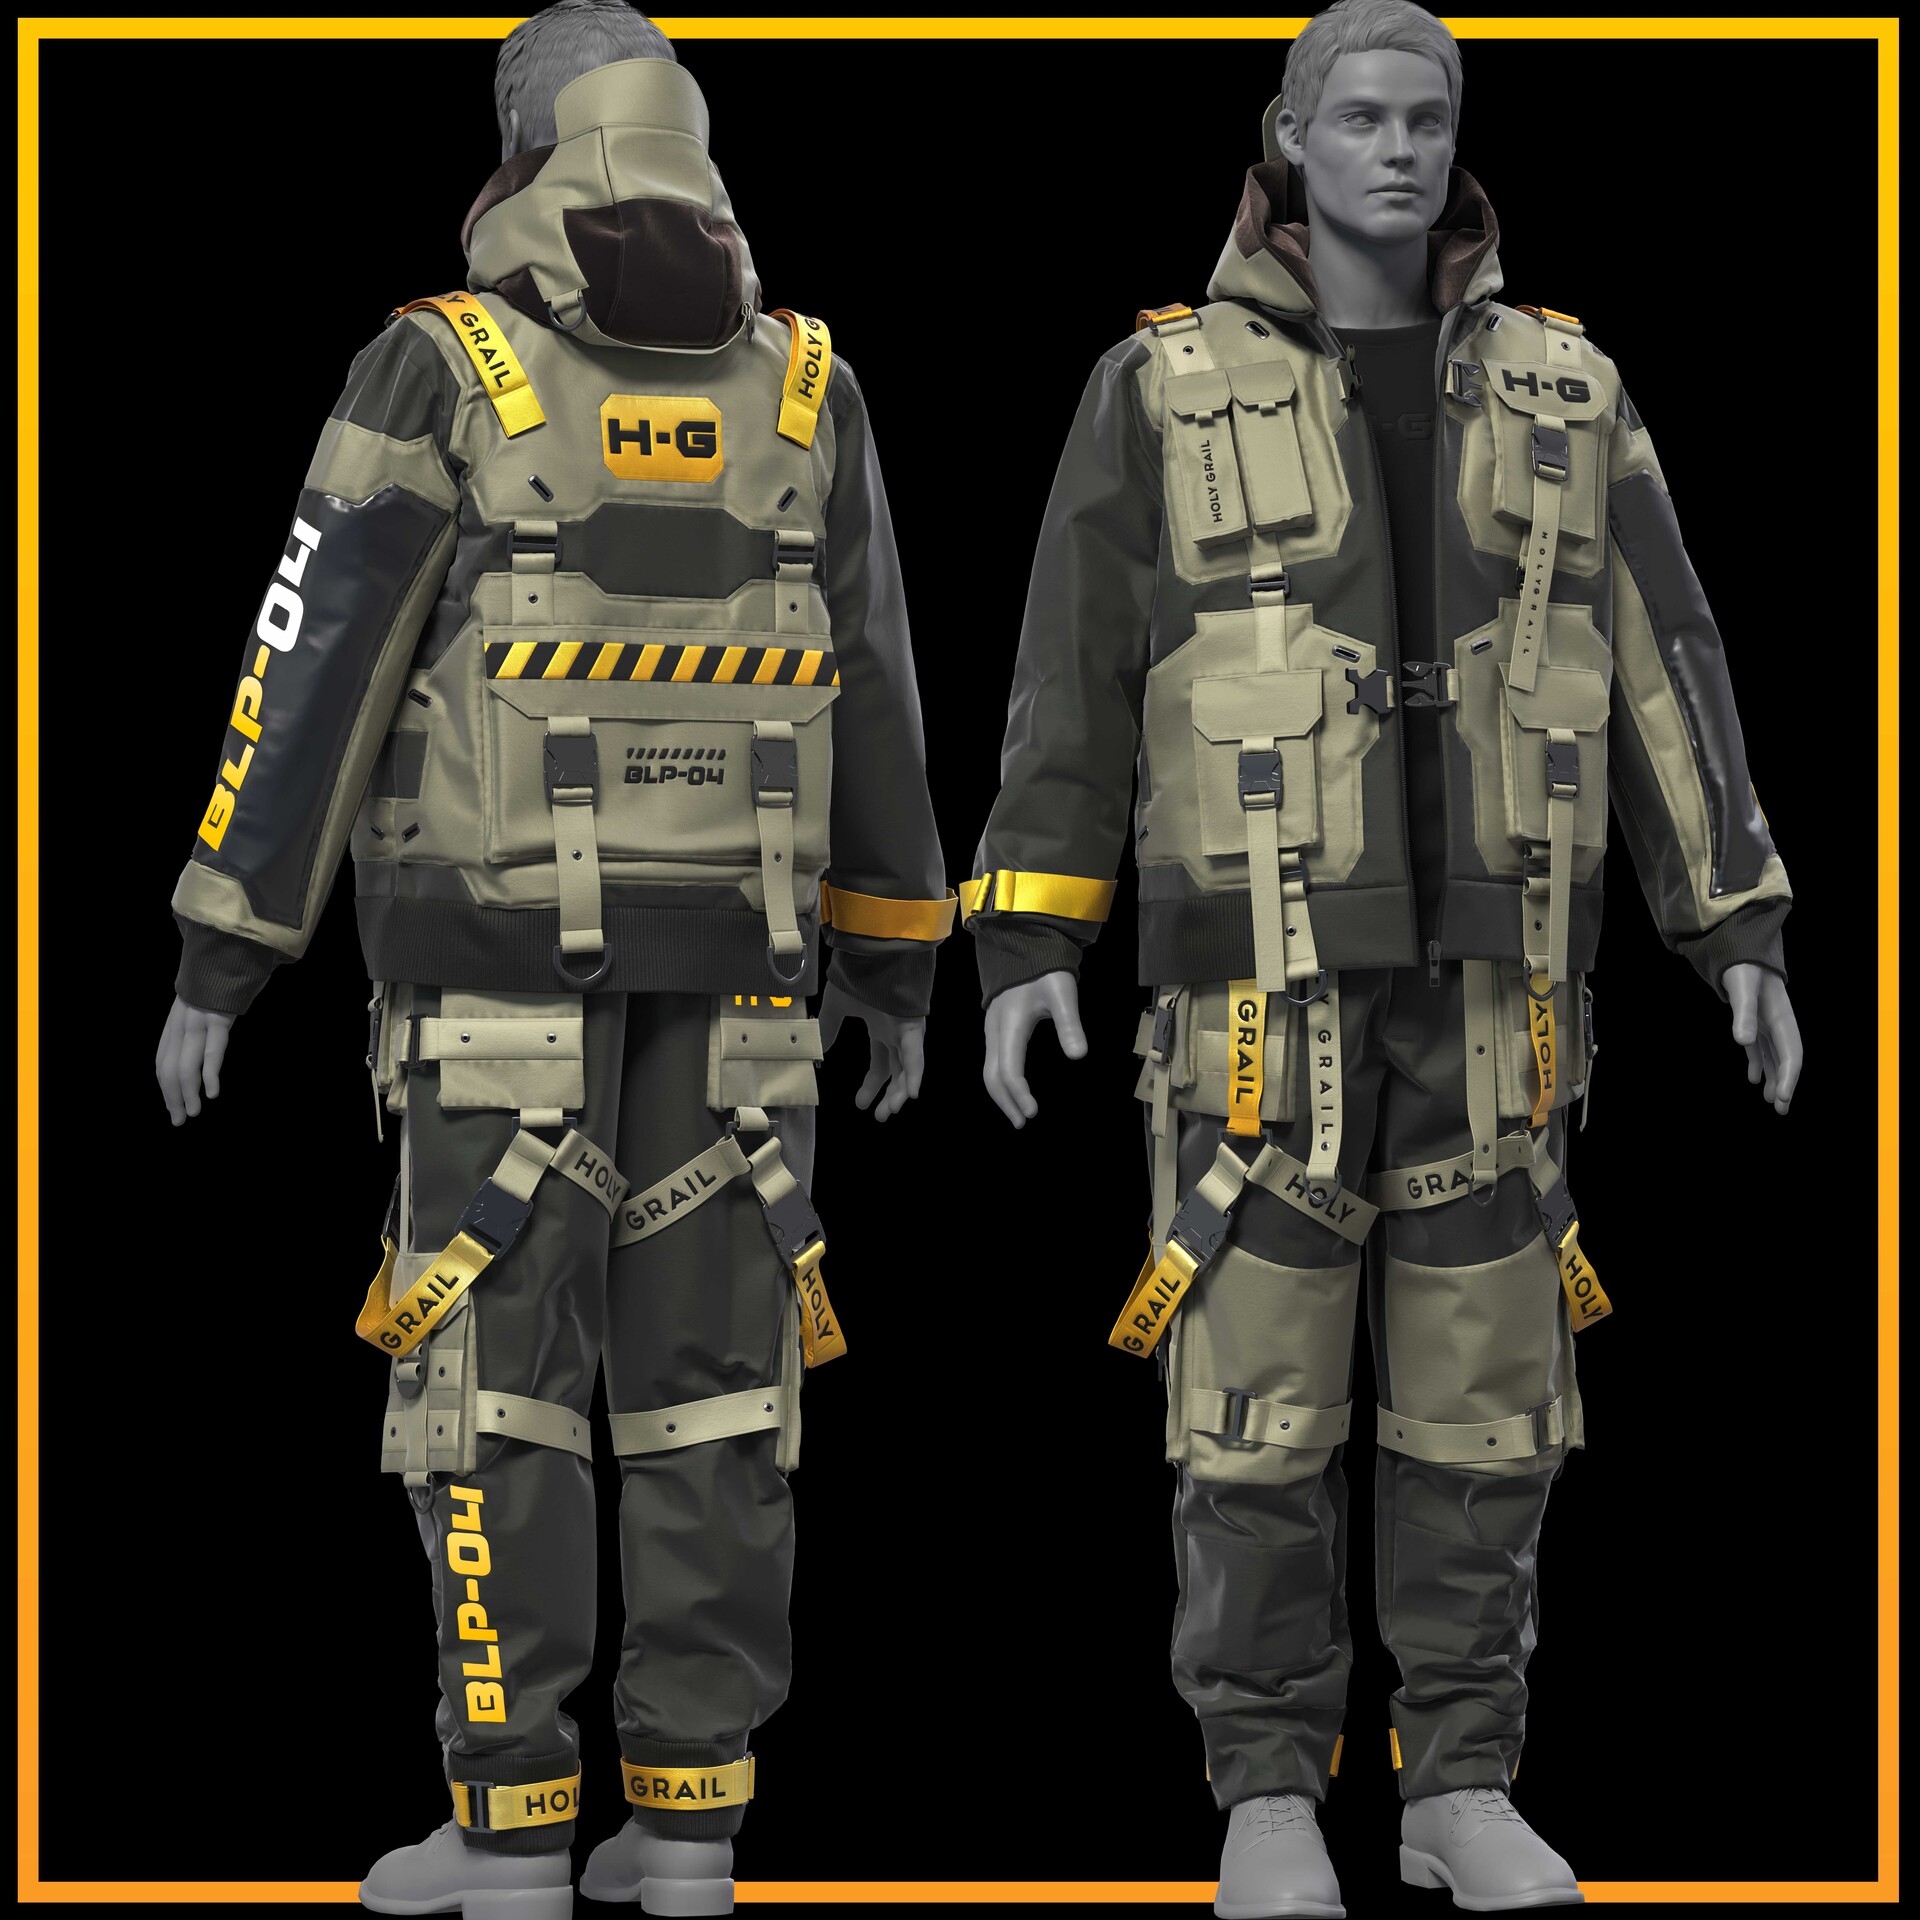 ArtStation - military uniform